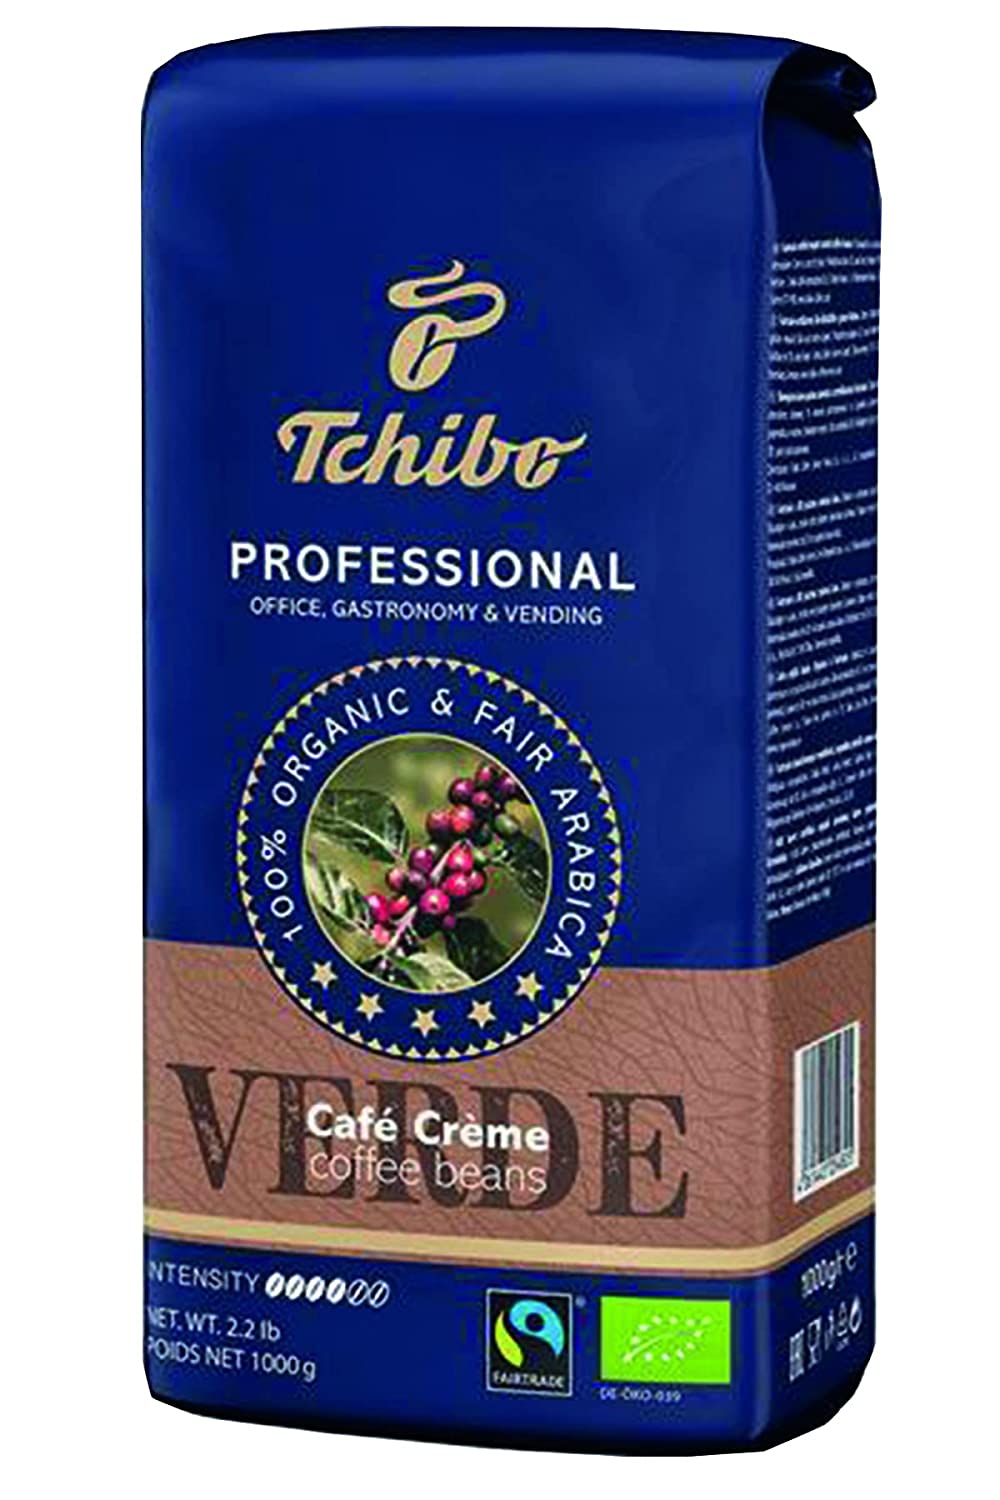 Tchibo Professional Caffe Crema Verde 1kg whole coffee bean, Organic Fairtrade, 100% Arabica